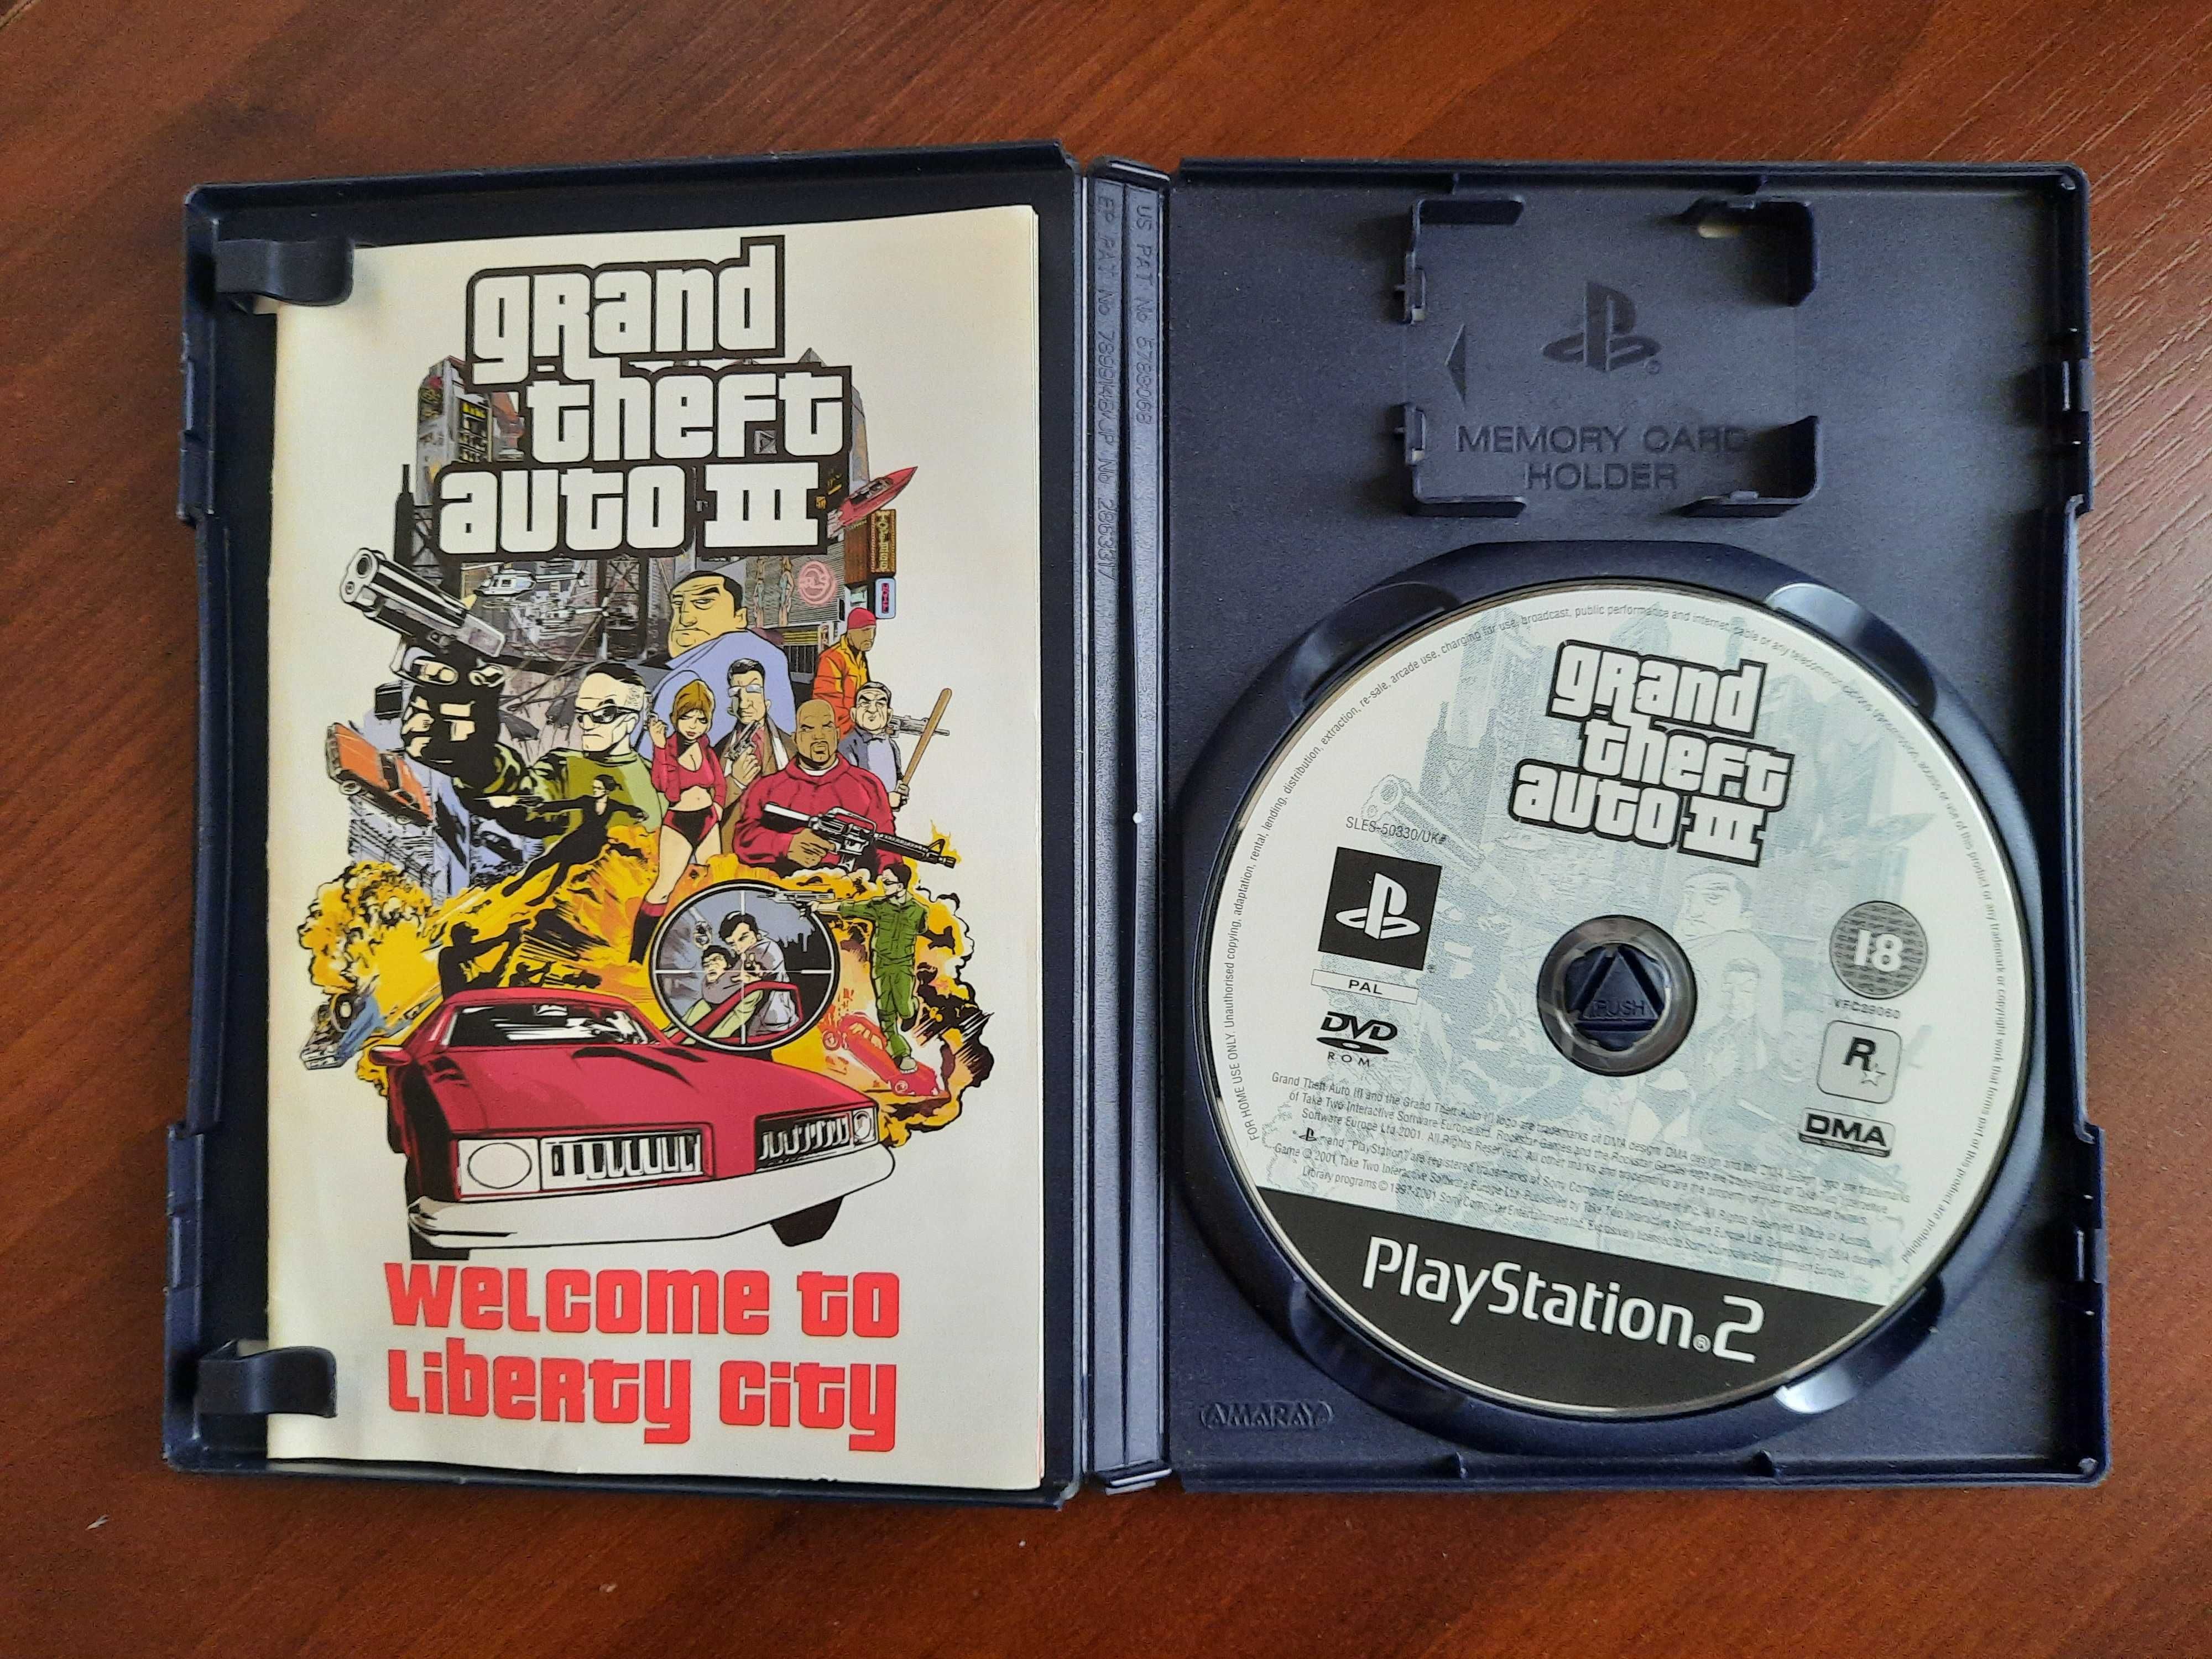 Grand Theft Auto III GTA 3 PS2